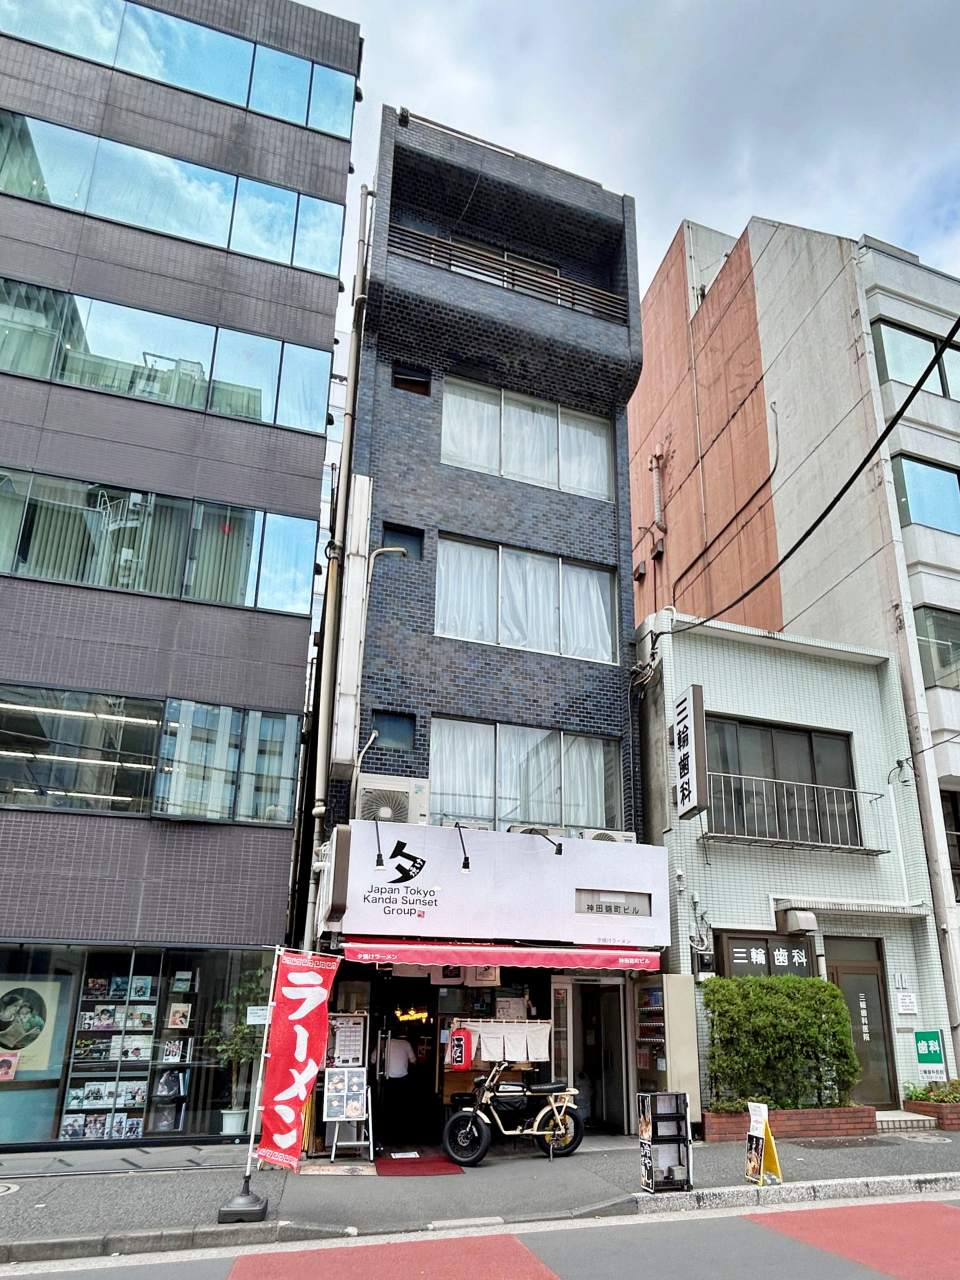 Kanda Nishikicho Building (Red Snow Kanda Nishikicho Building)